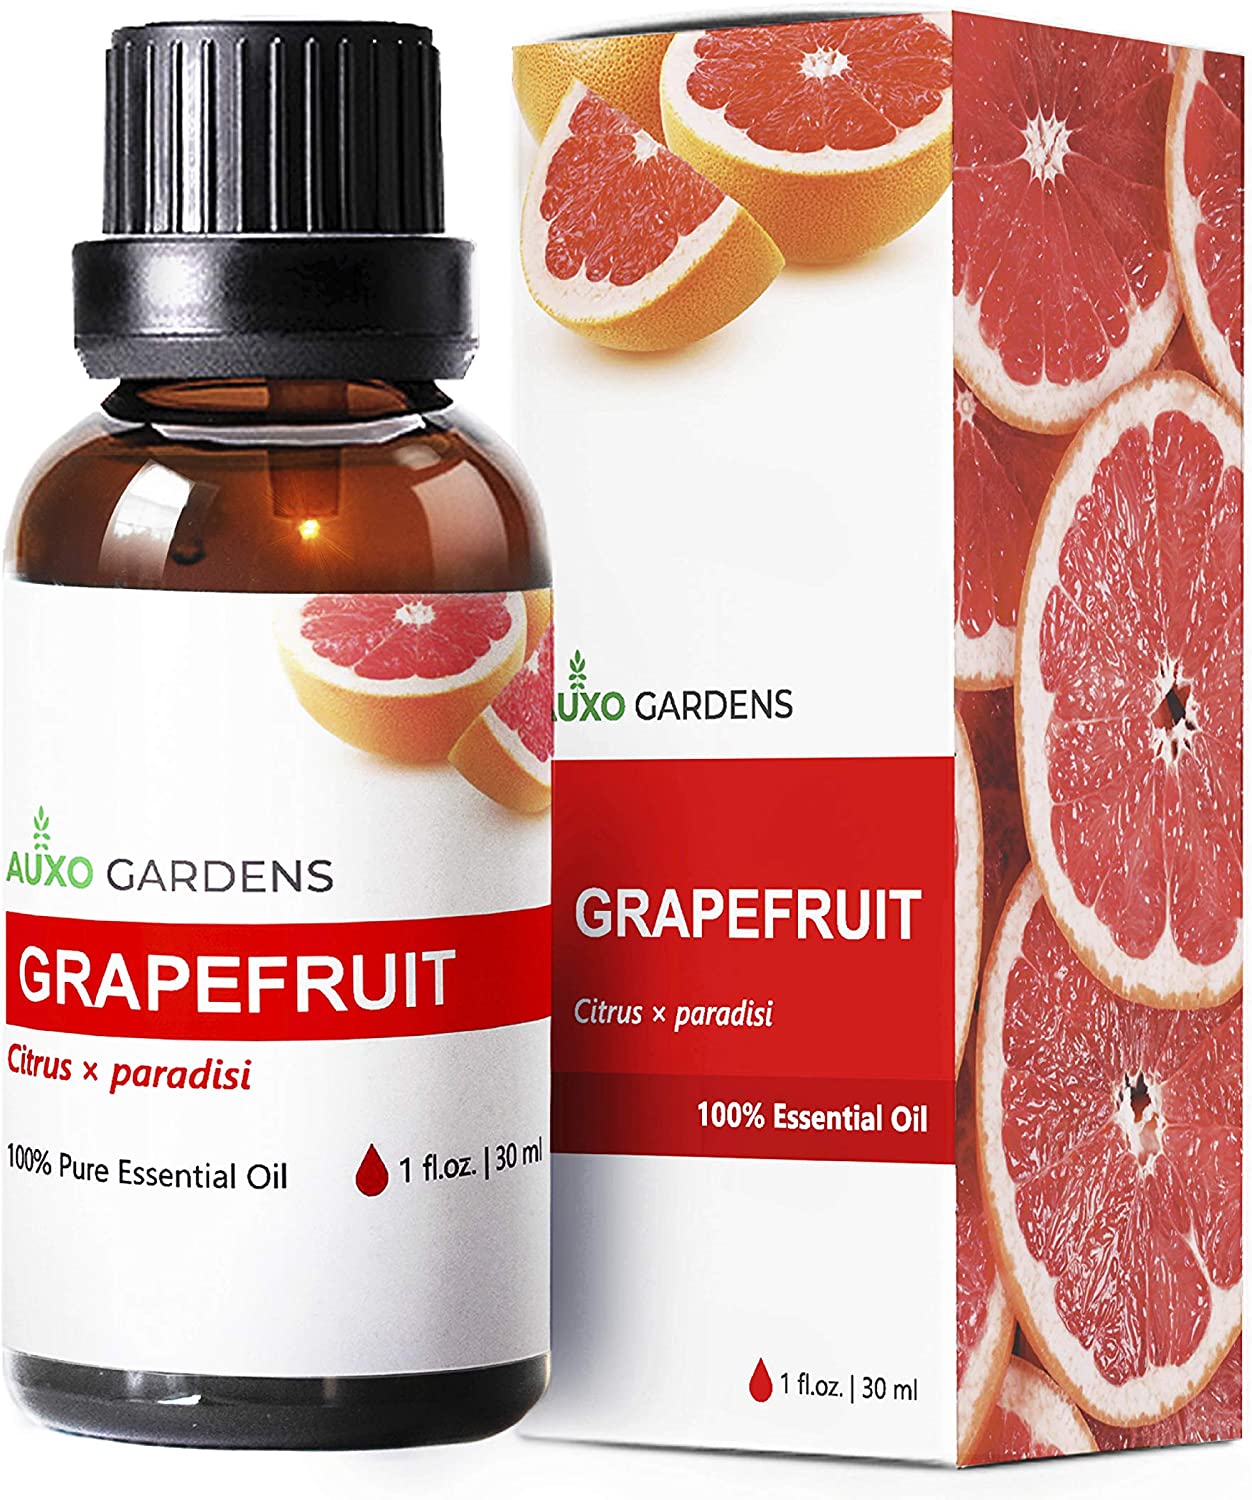 Pink Grapefruit Essential Oil - 1 oz. - Essential Oils - African Beauty